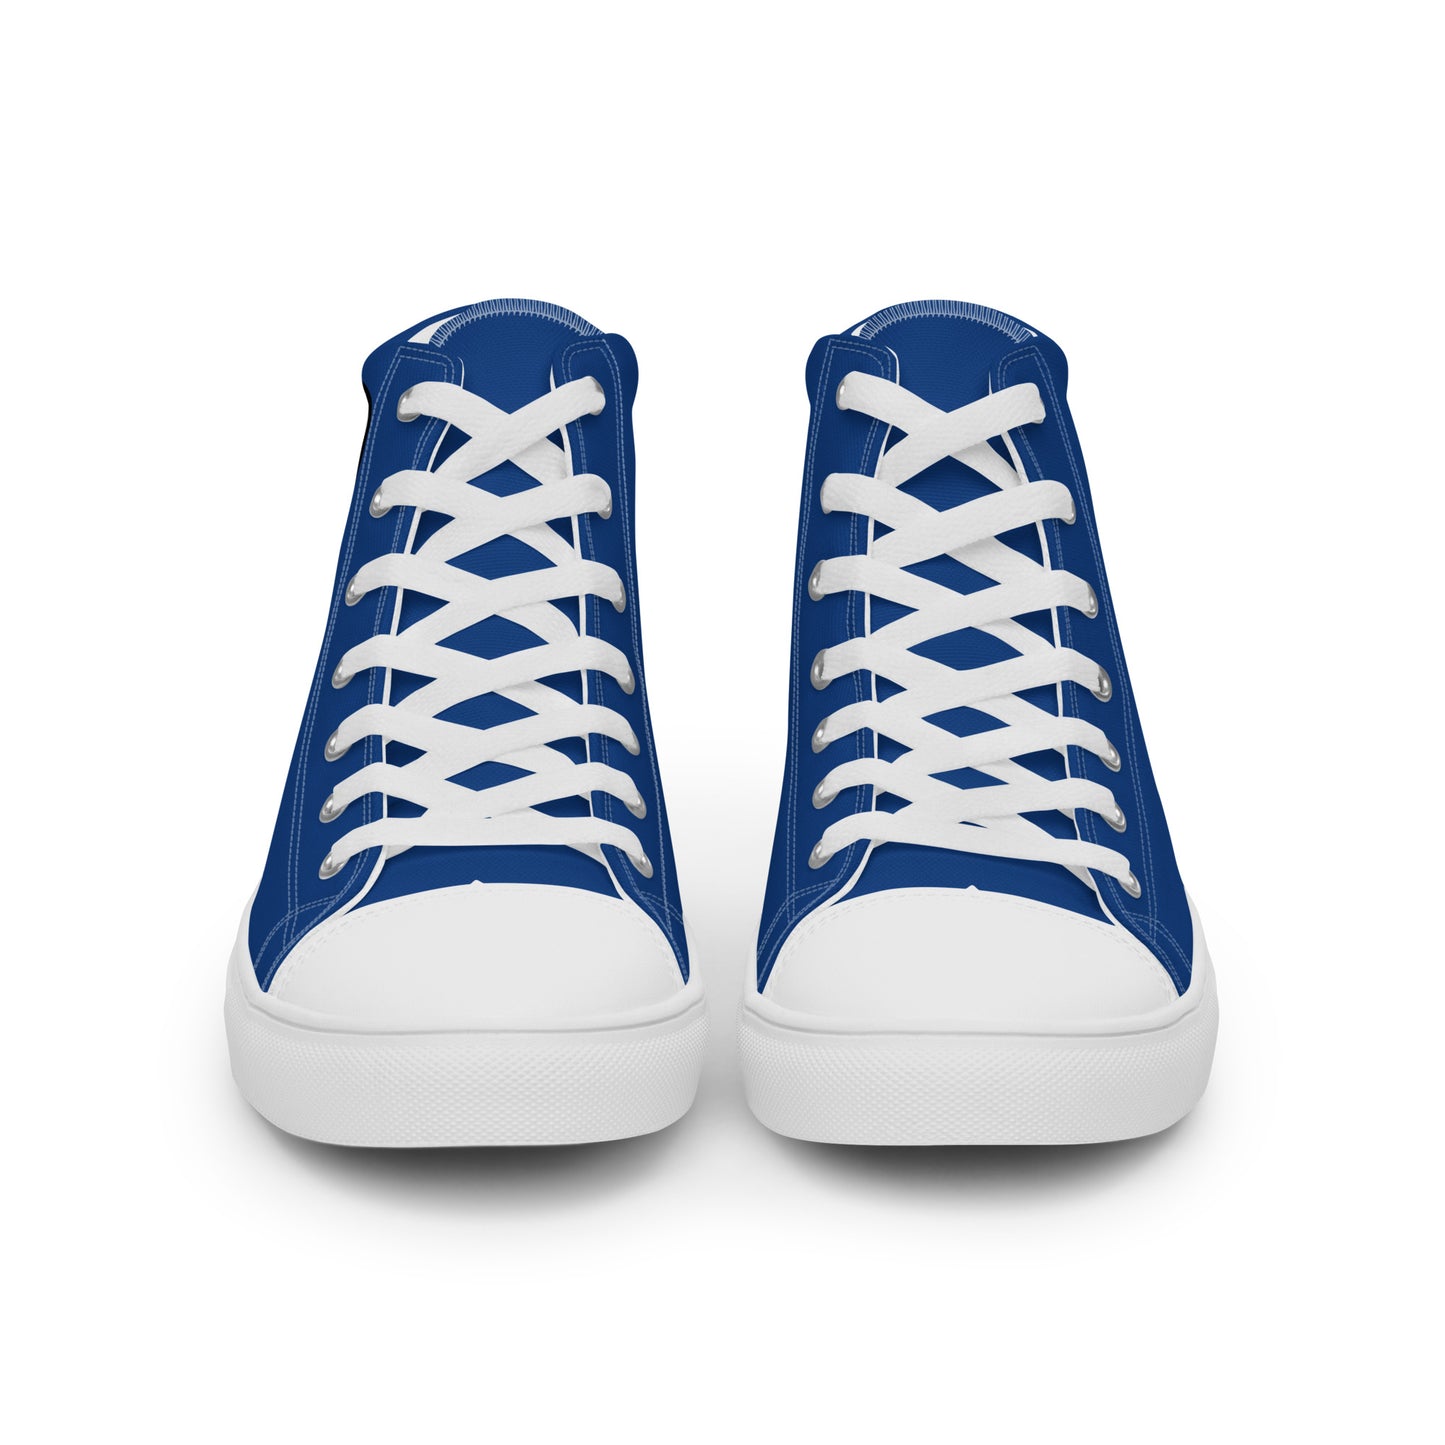 Paraguay - Women - Blue - High top shoes